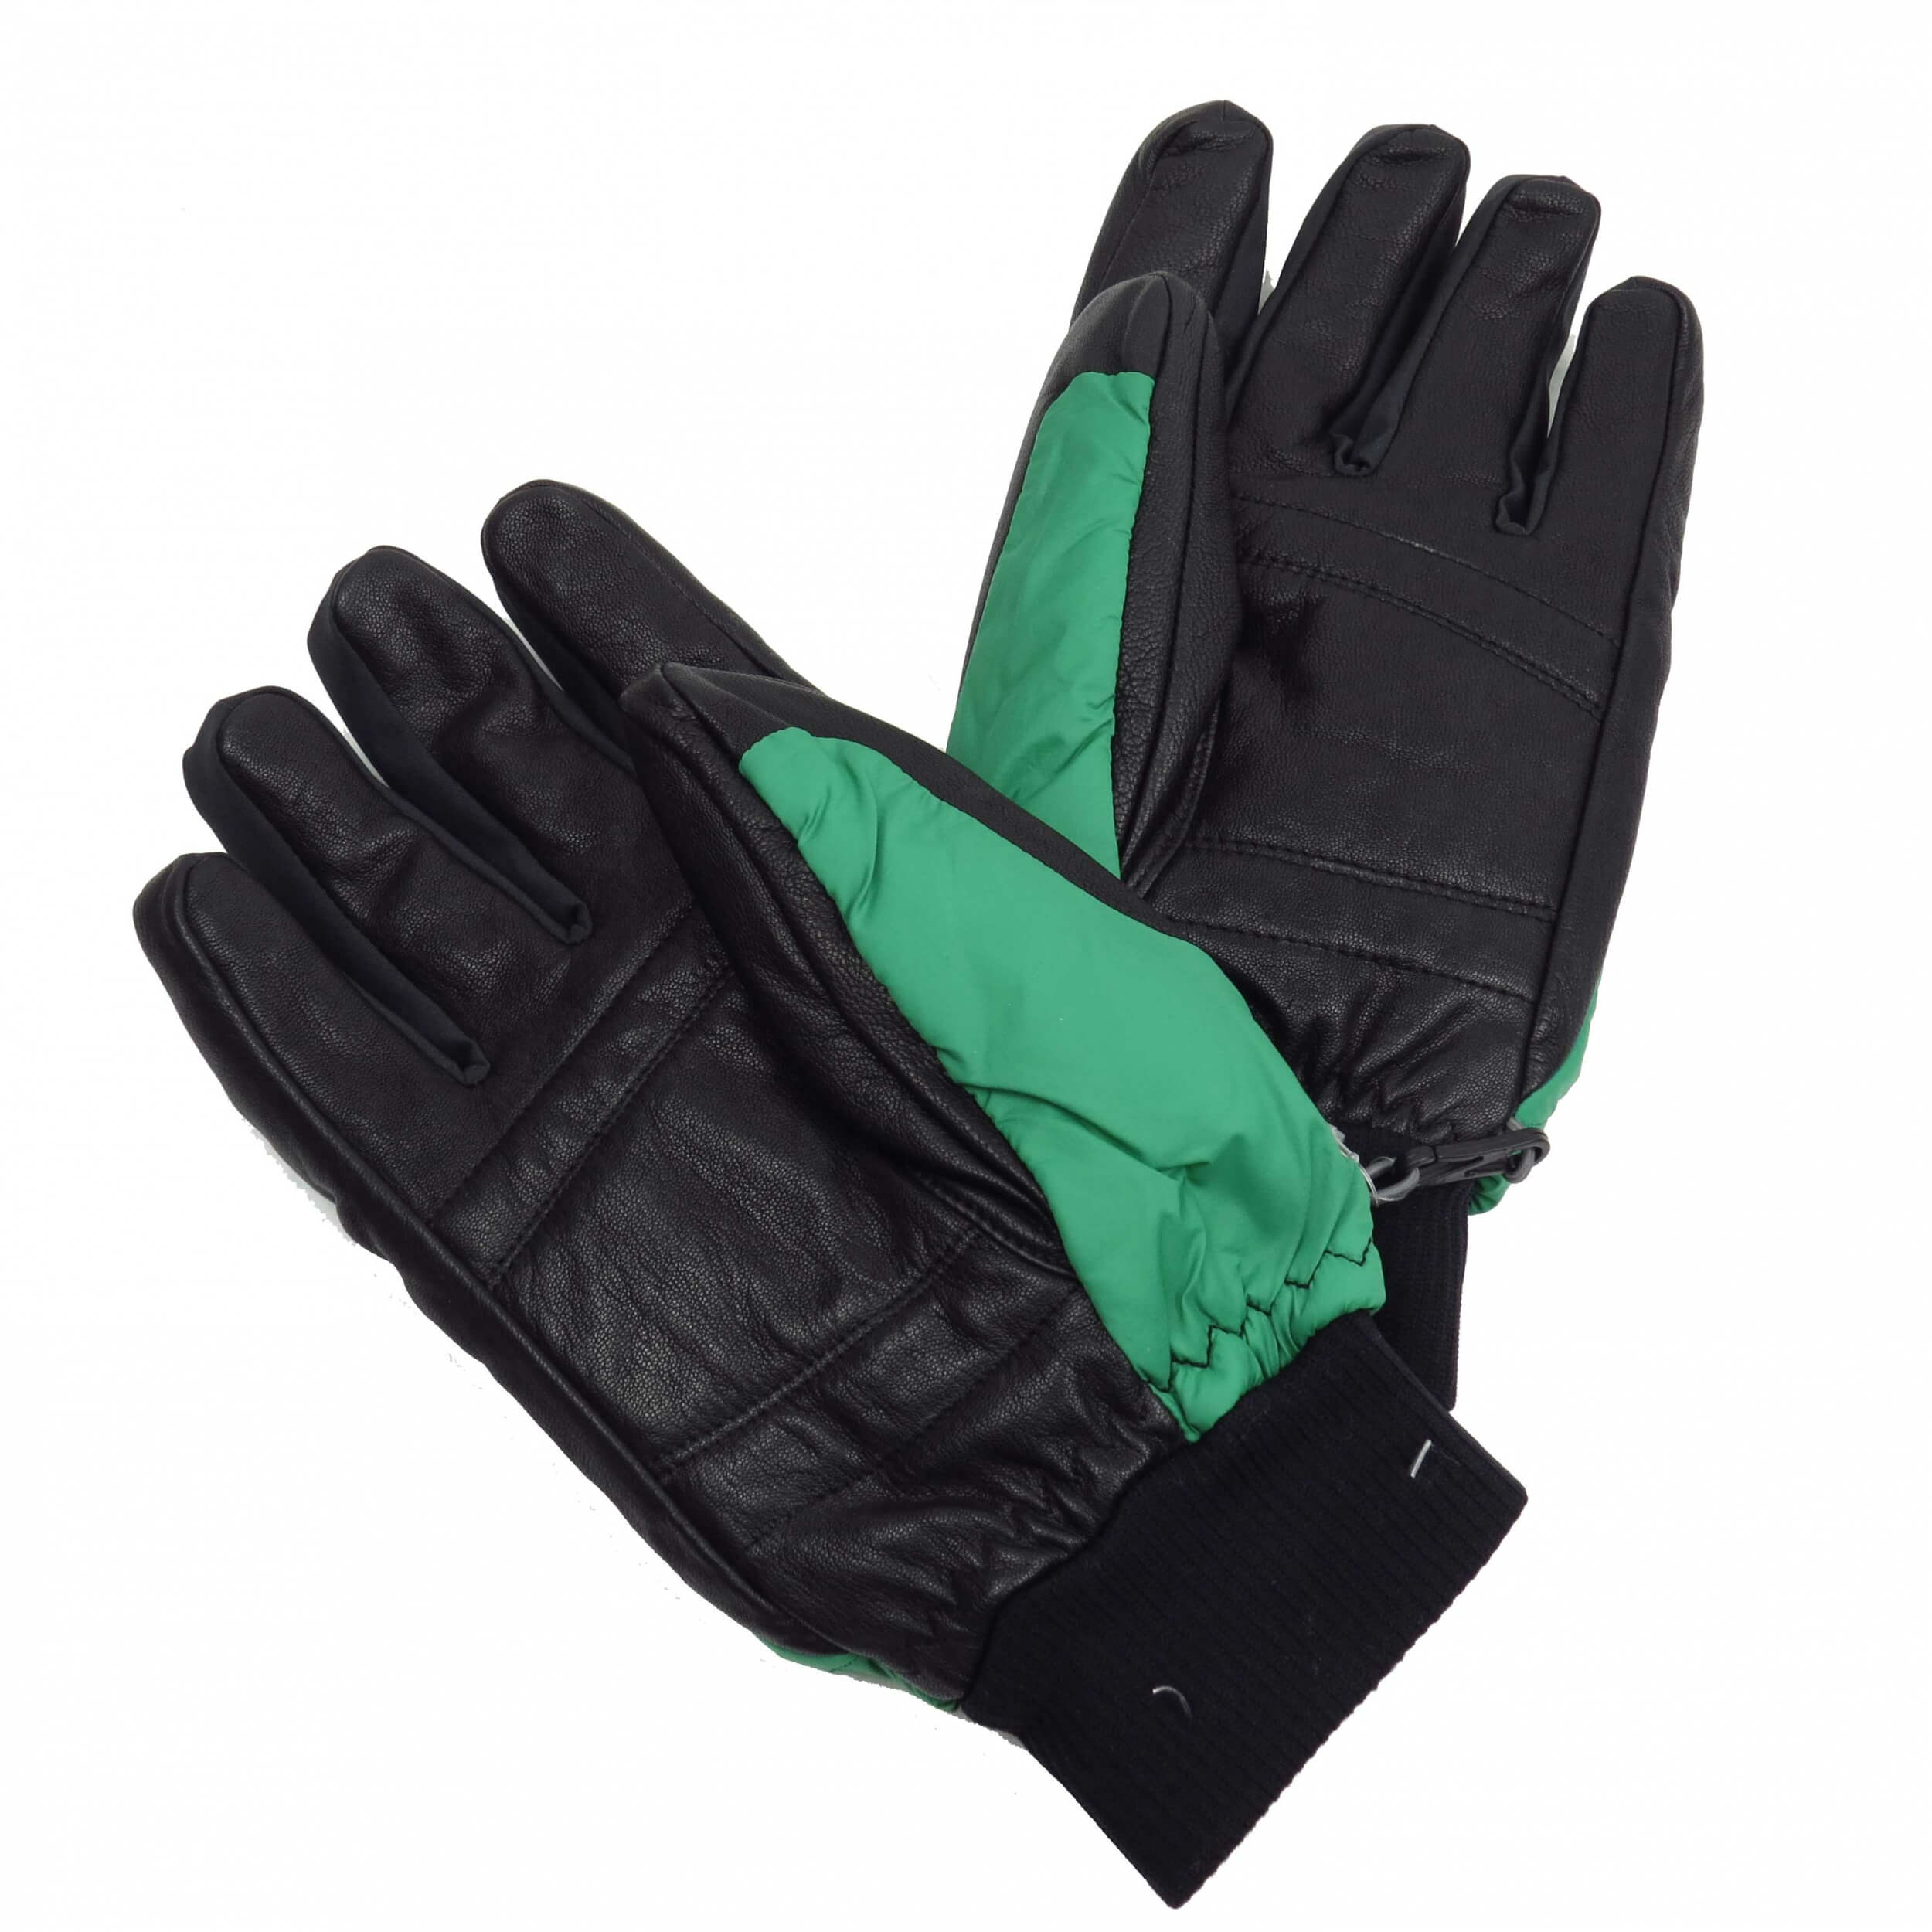 ZIENER Ski Handschuhe Xindu grün 764 groß